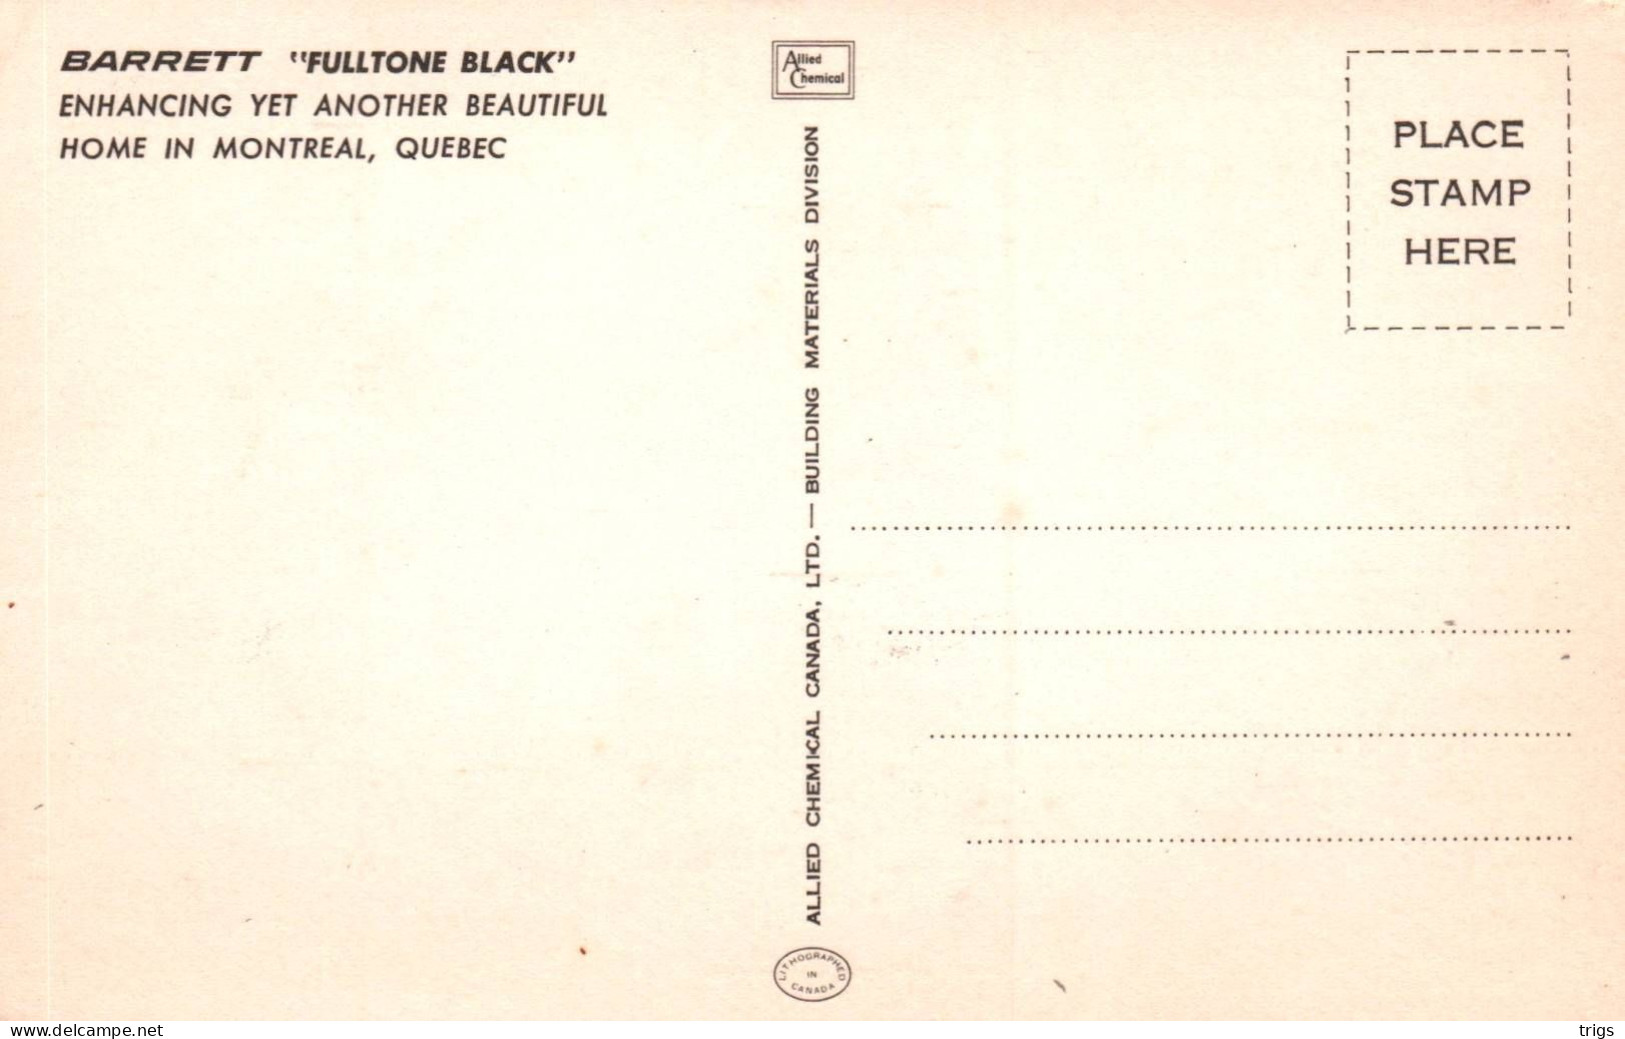 Montreal - Barrett "Fulltone Black" - Montreal